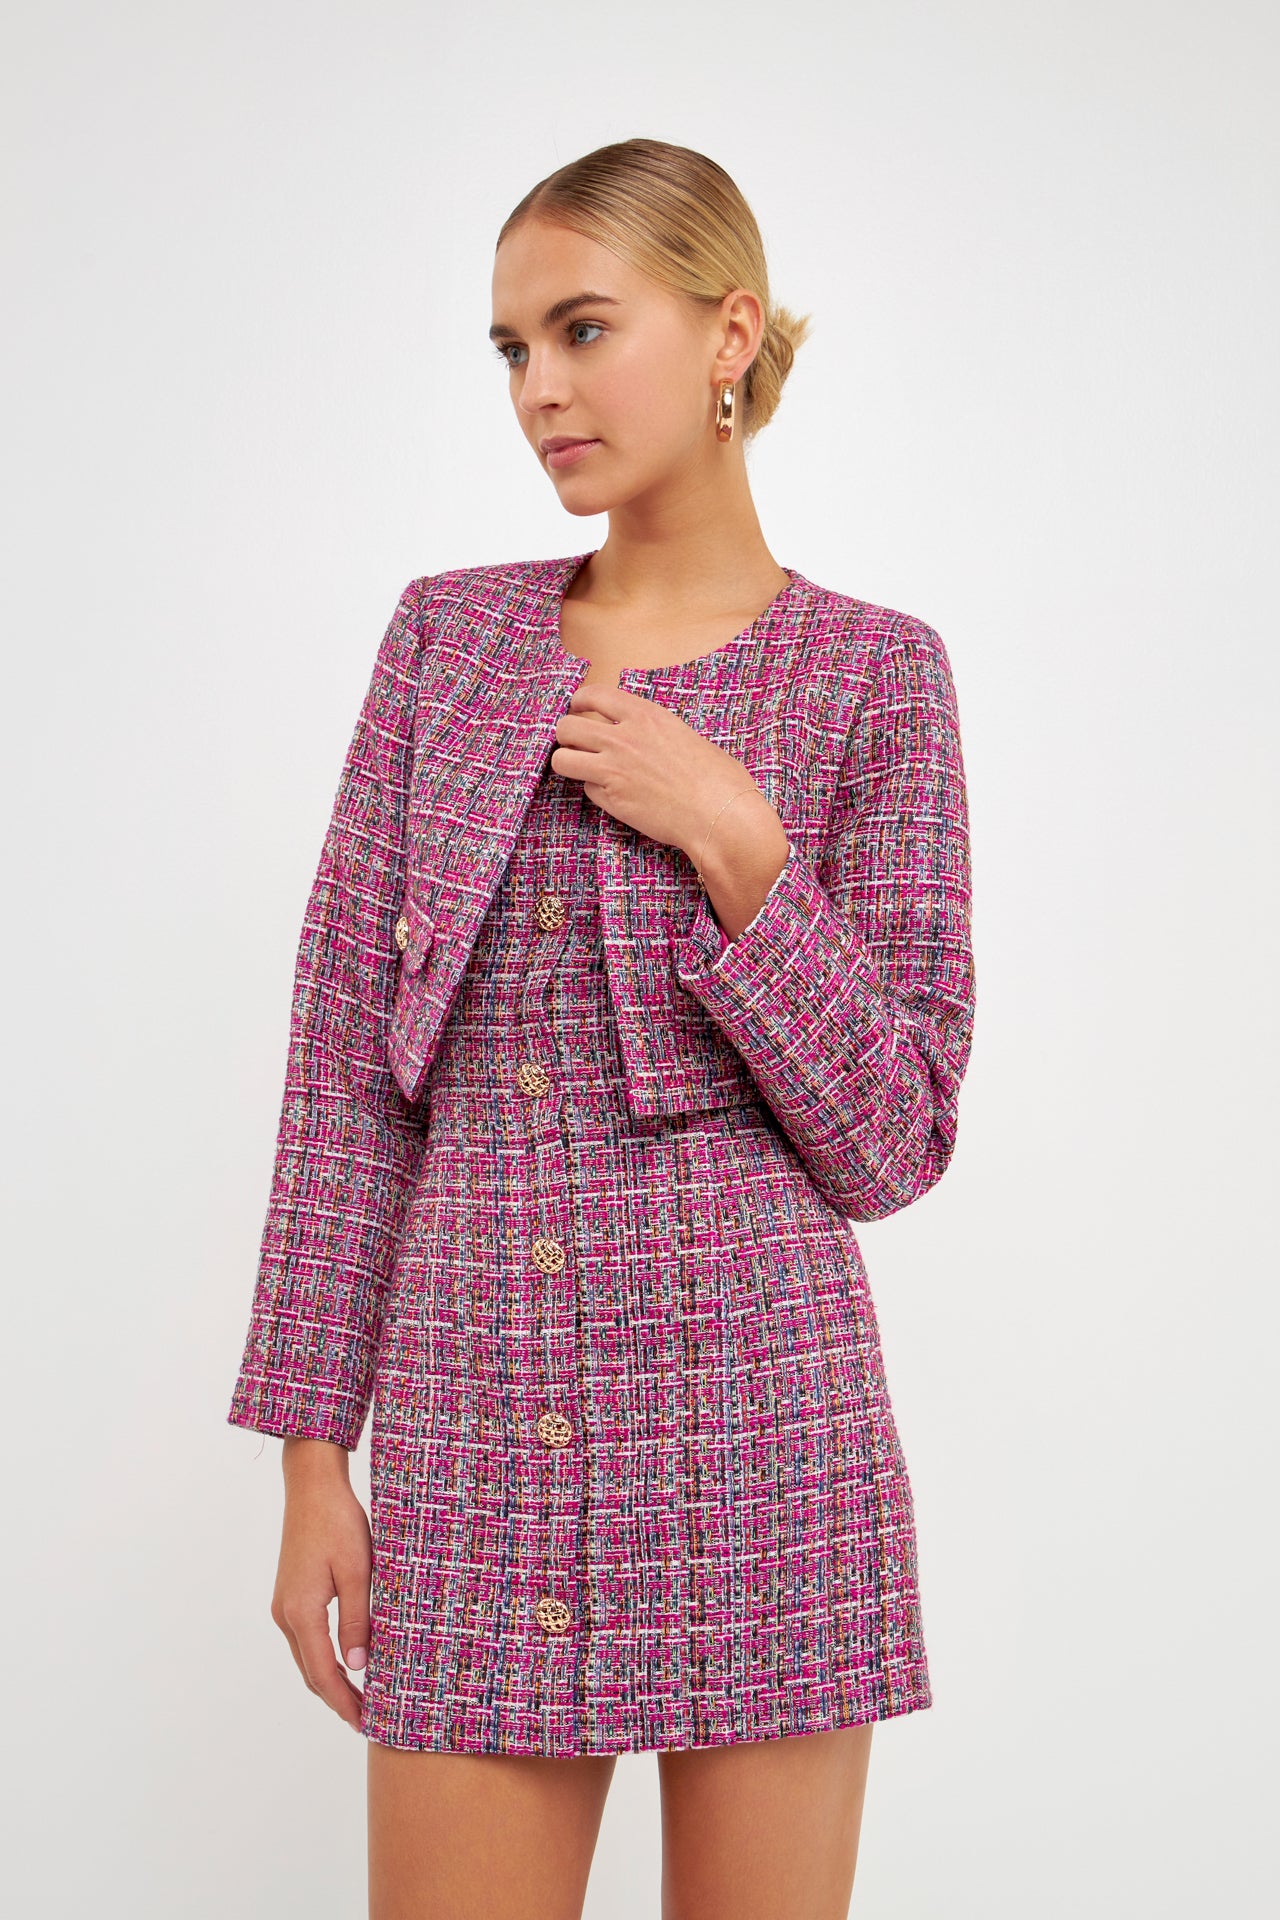 Endless Rose Premium Tweed Blazer Mini Dress